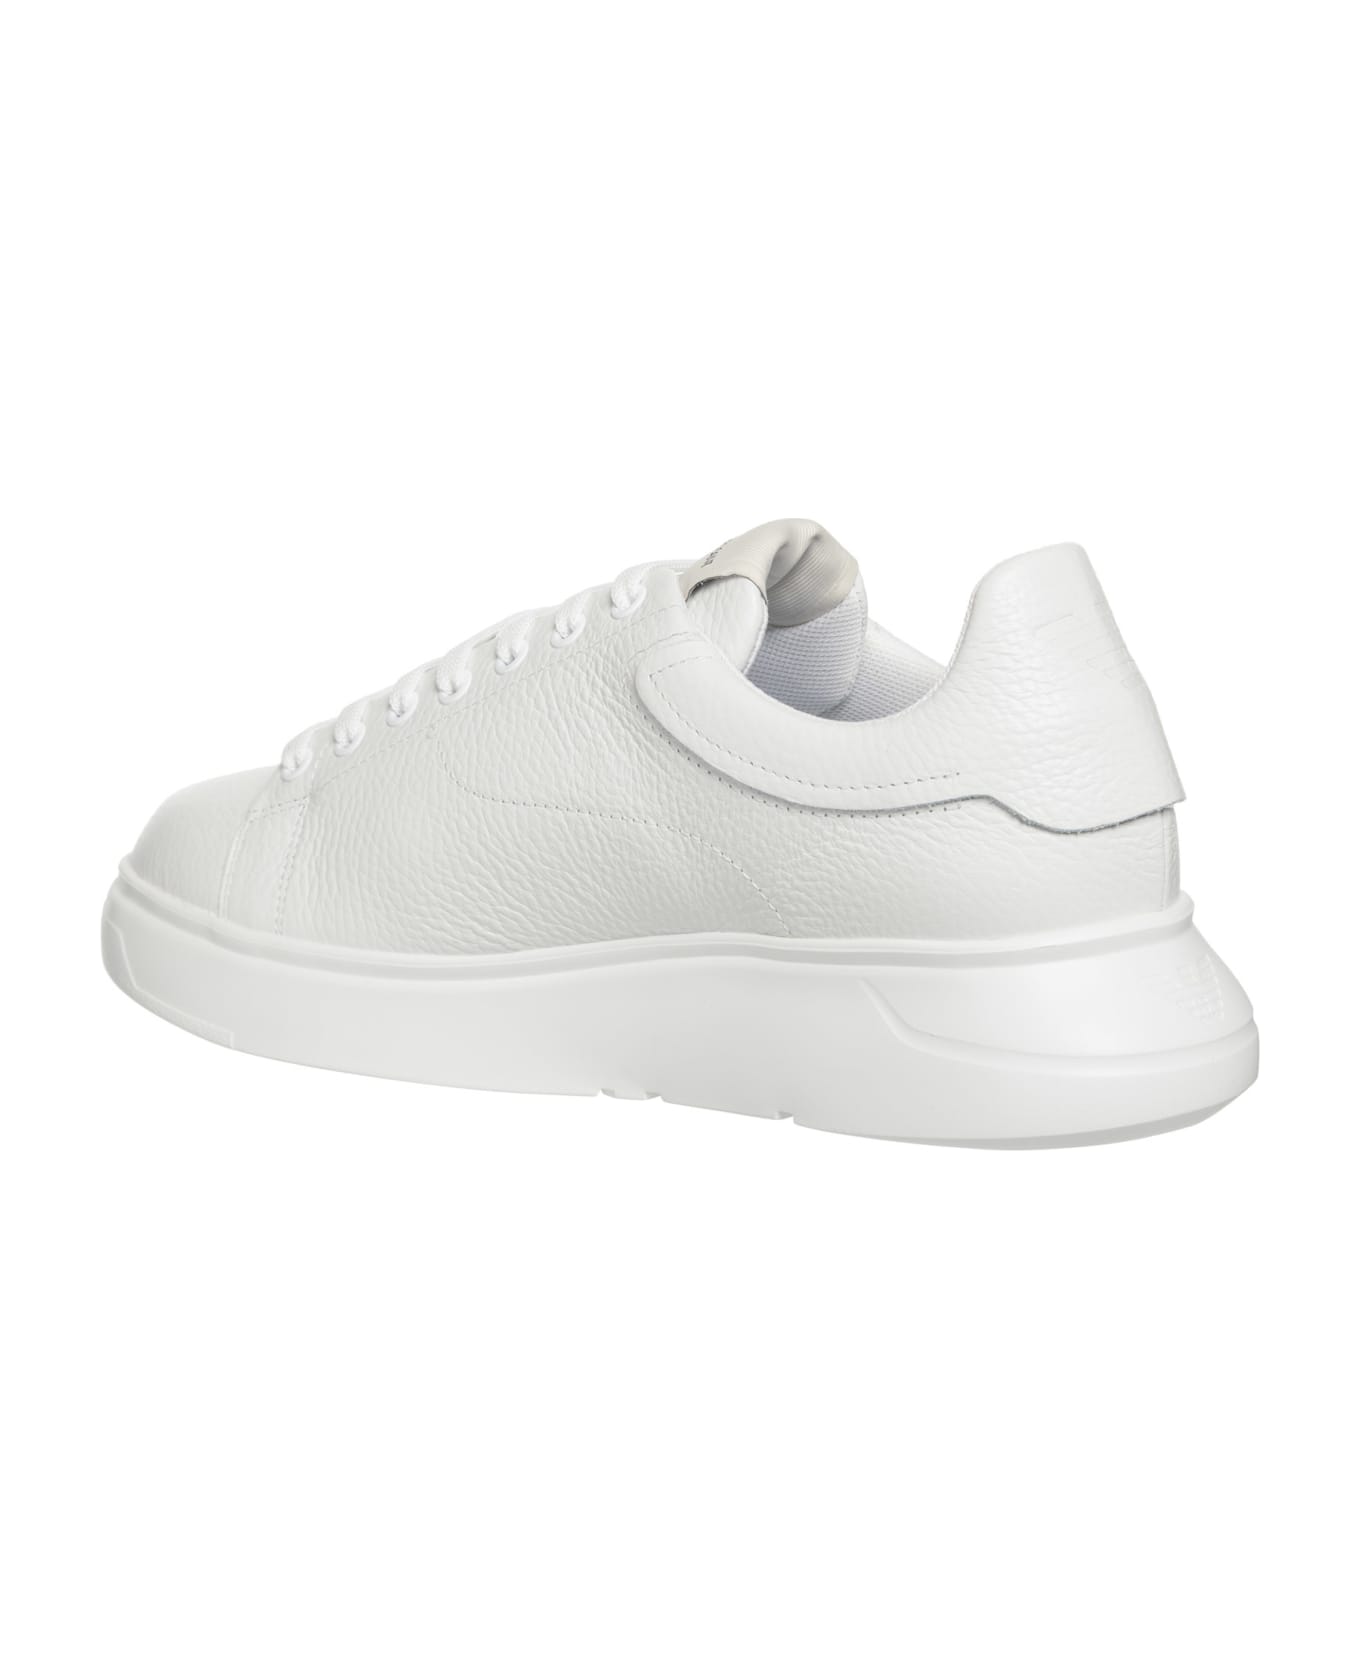 Emporio Armani Leather Sneakers - White スニーカー